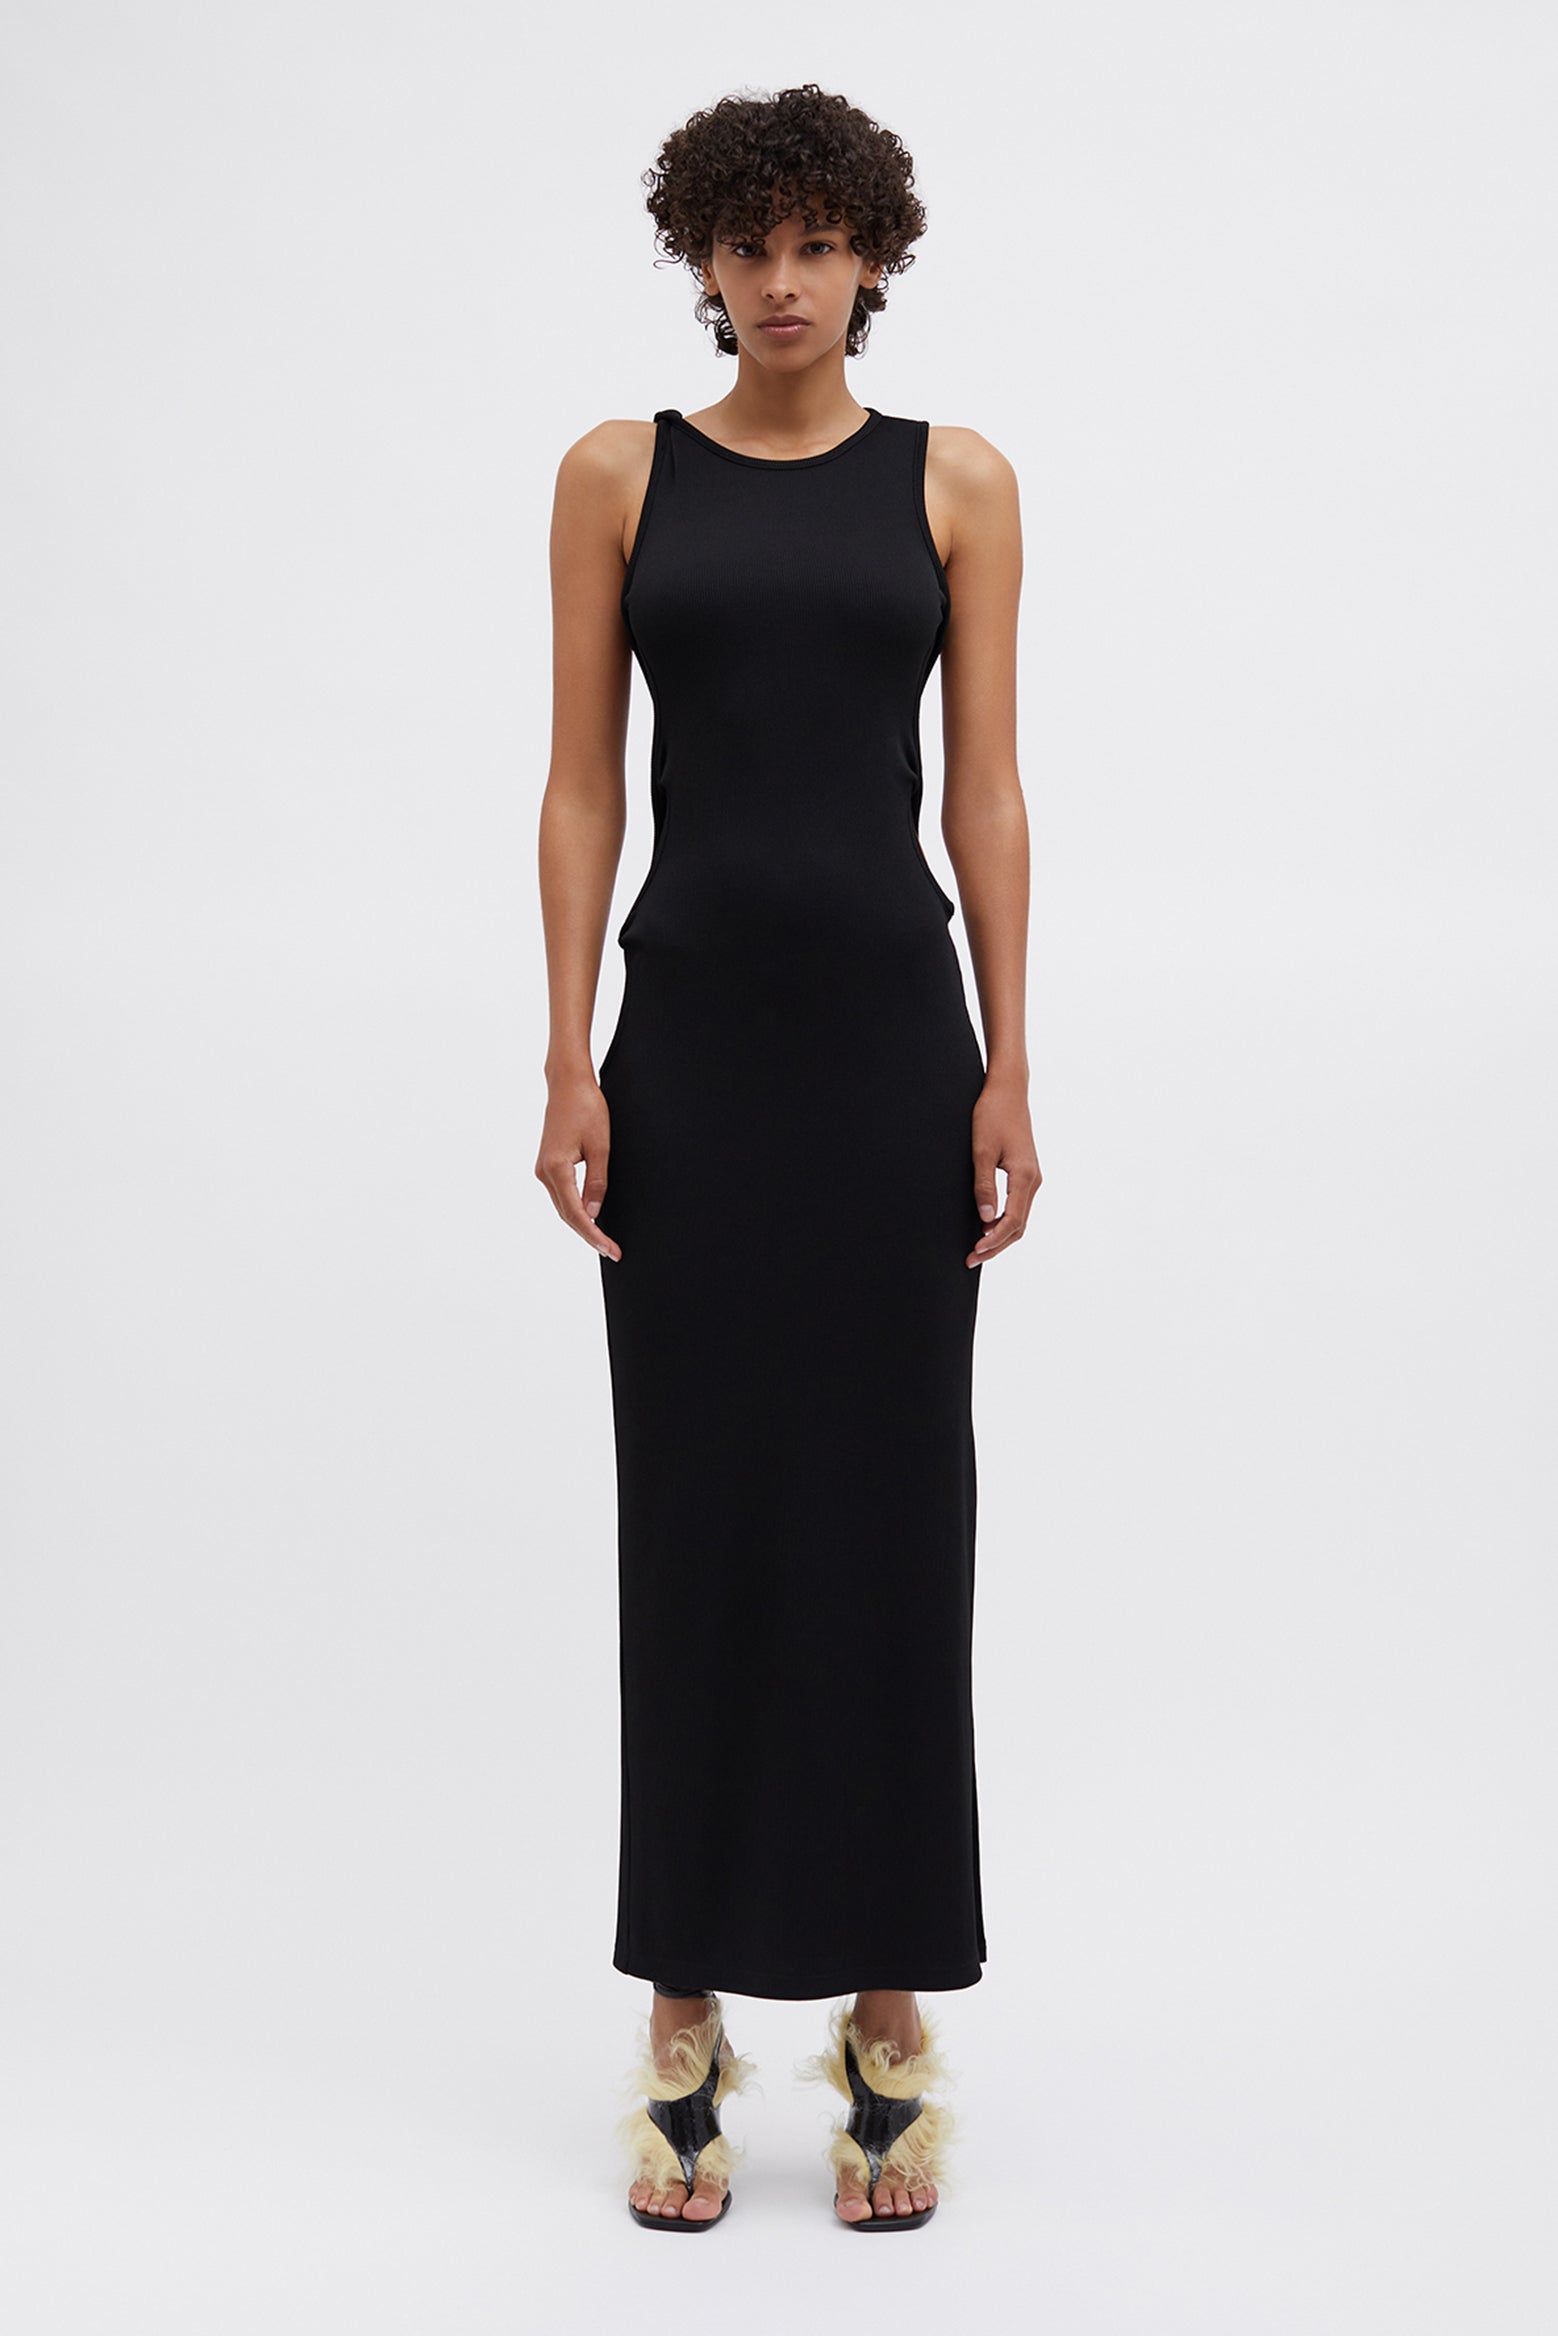 Christopher Esber Oblix Twist Halter Dress in Black available at The New Trend Australia. 